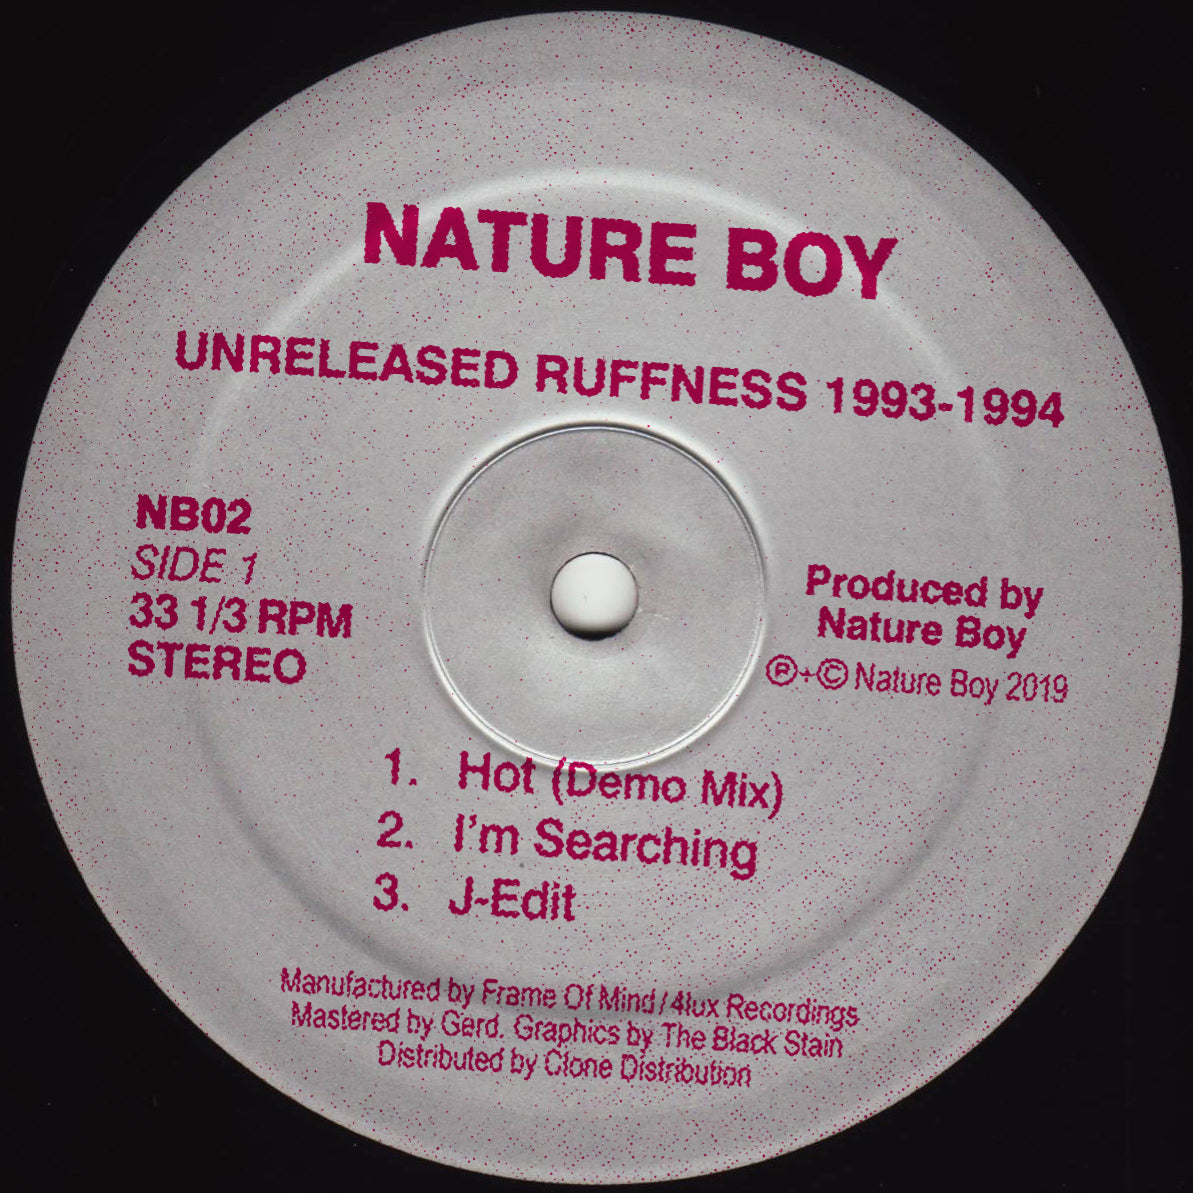 NATURE BOY 'UNRELEASED RUFFNESS 1993-1994' 12" (REISSUE)